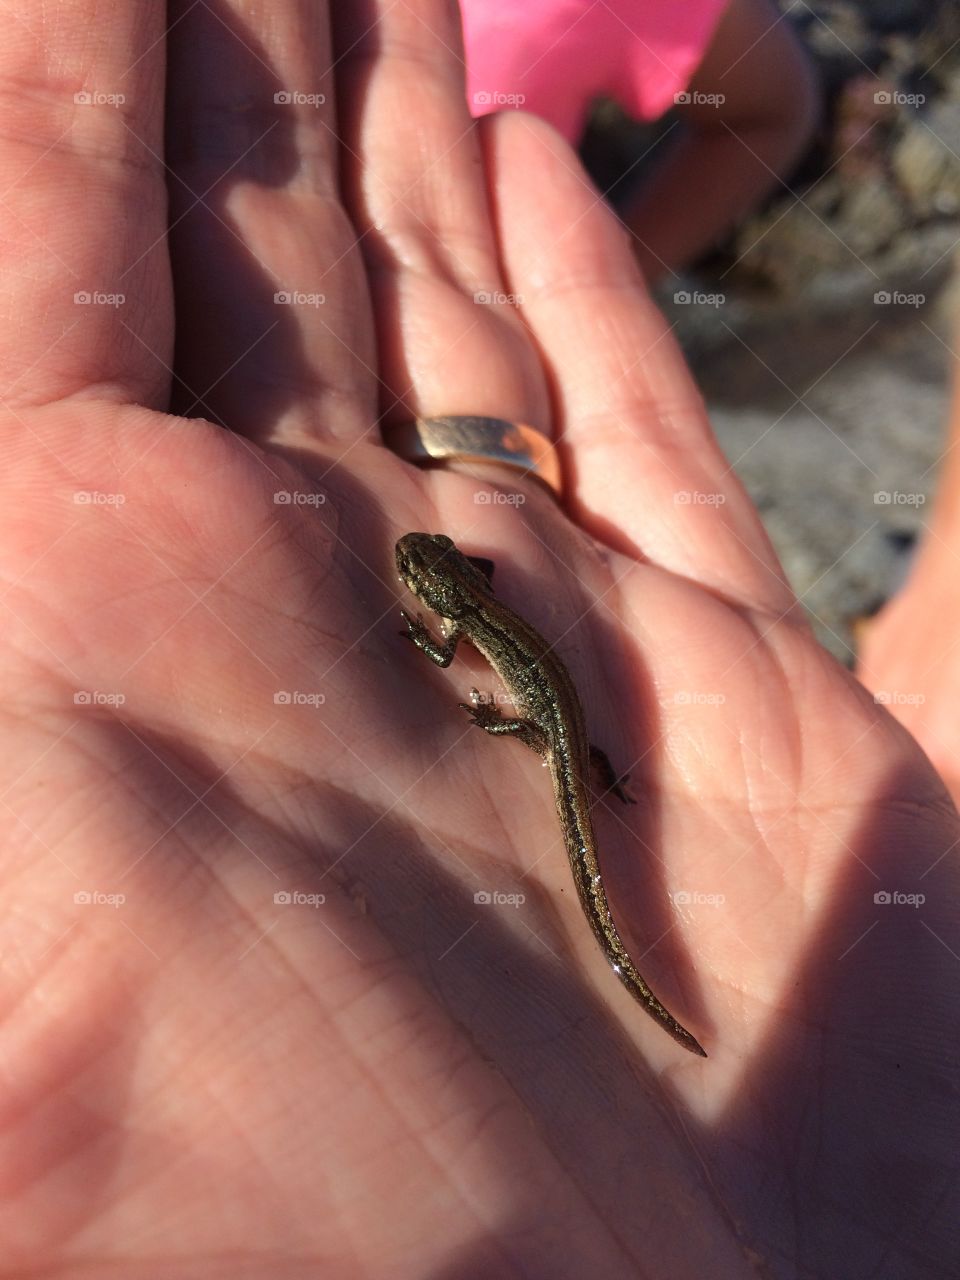 Salamander in a hand